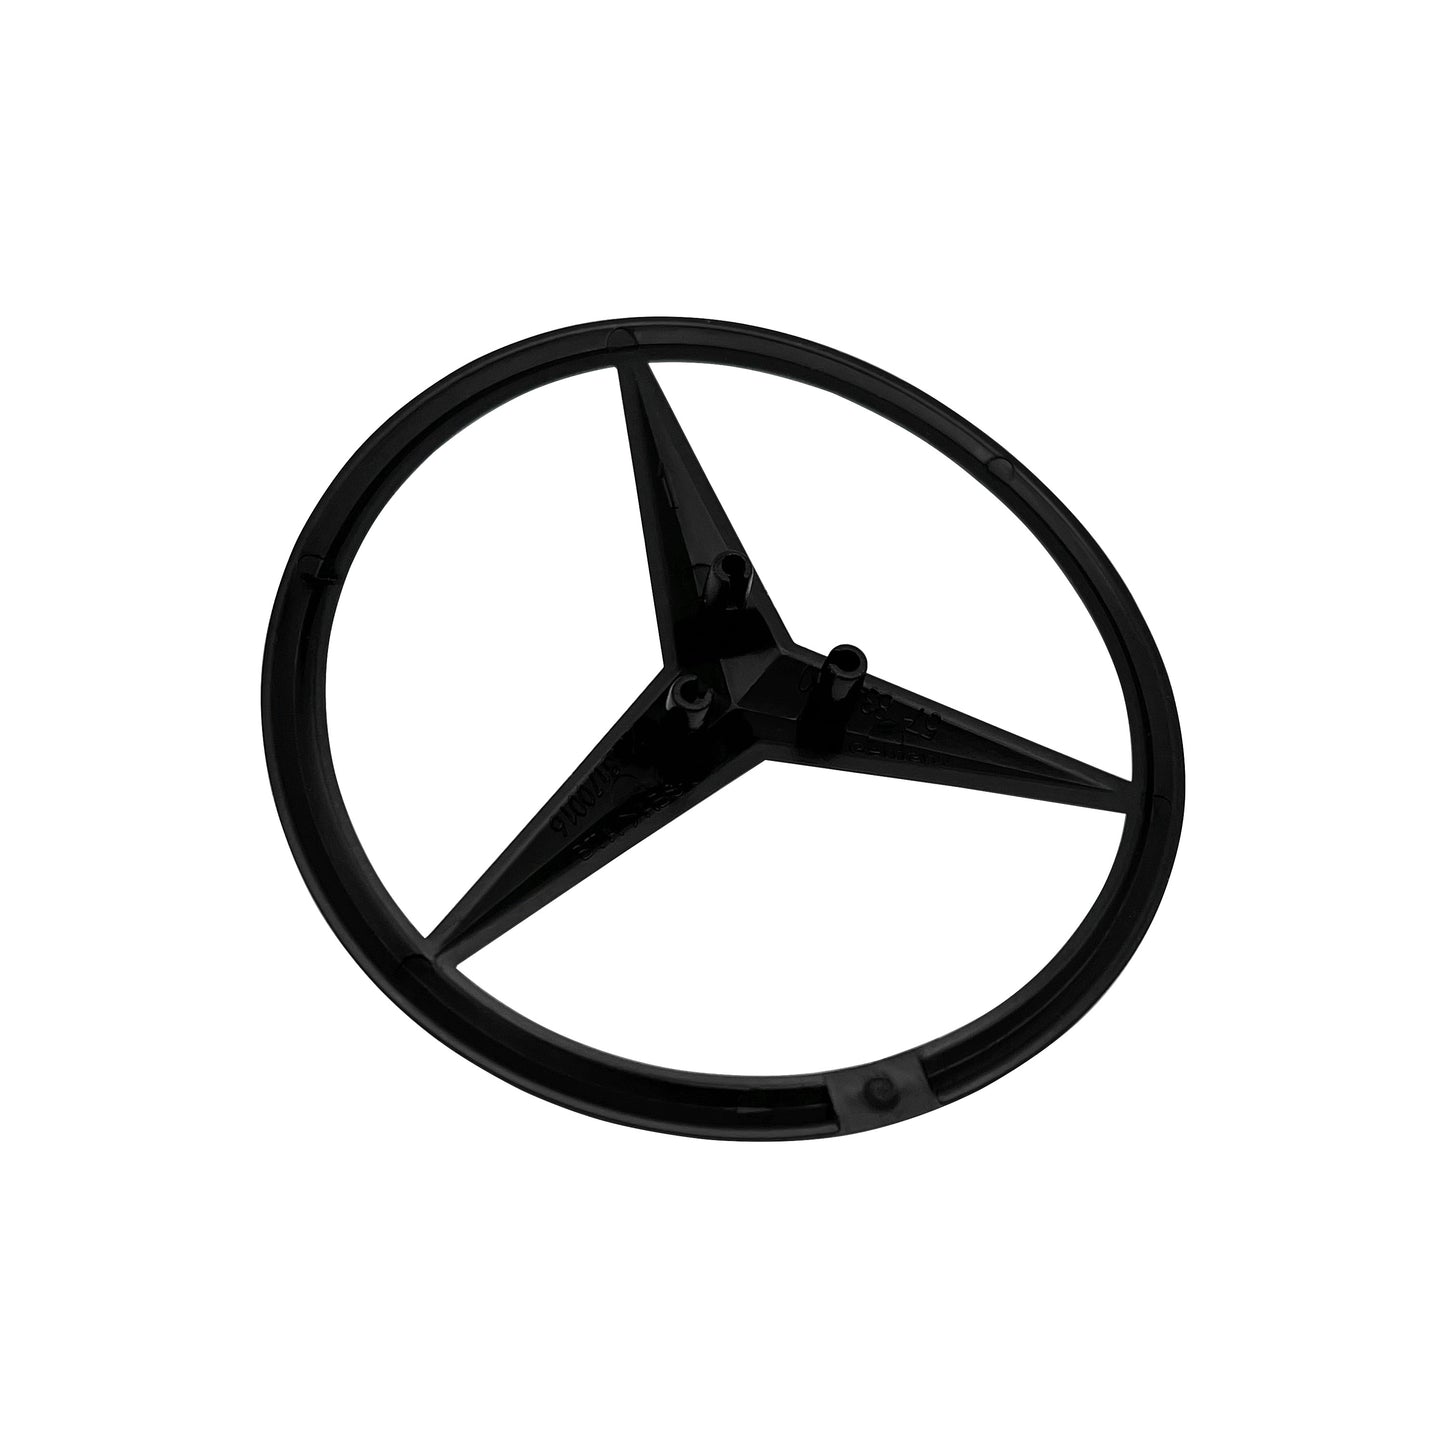 Mercedes-Benz C Class W205 AMG Glossy Black Star Trunk Emblem for Rear Lid Logo Badge